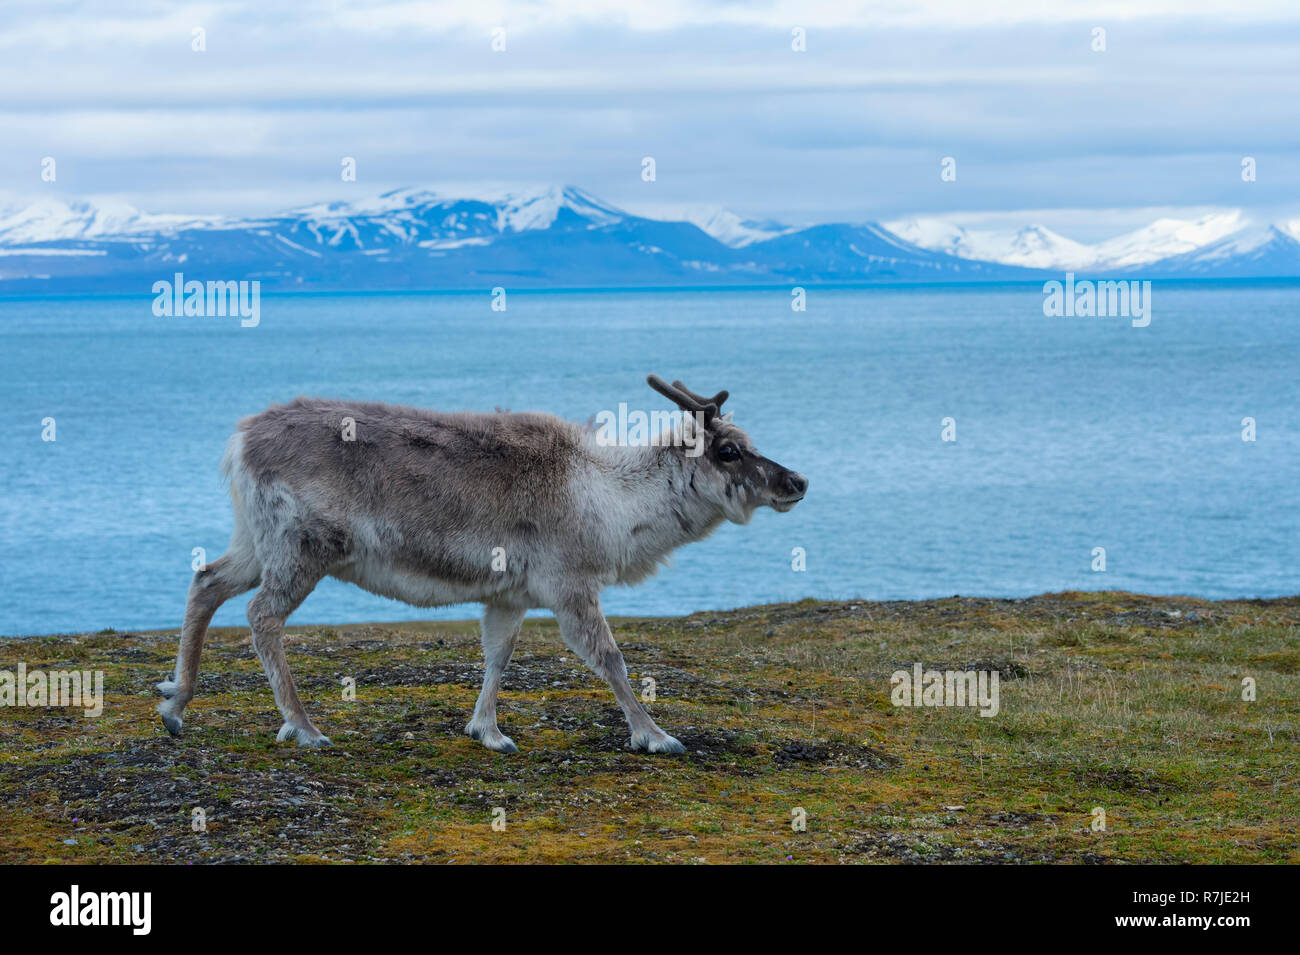 Renne du Svalbard (Rangifer tarandus platyrhynchus) dans la toundra, l'île du Spitzberg, archipel du Svalbard, Norvège Banque D'Images